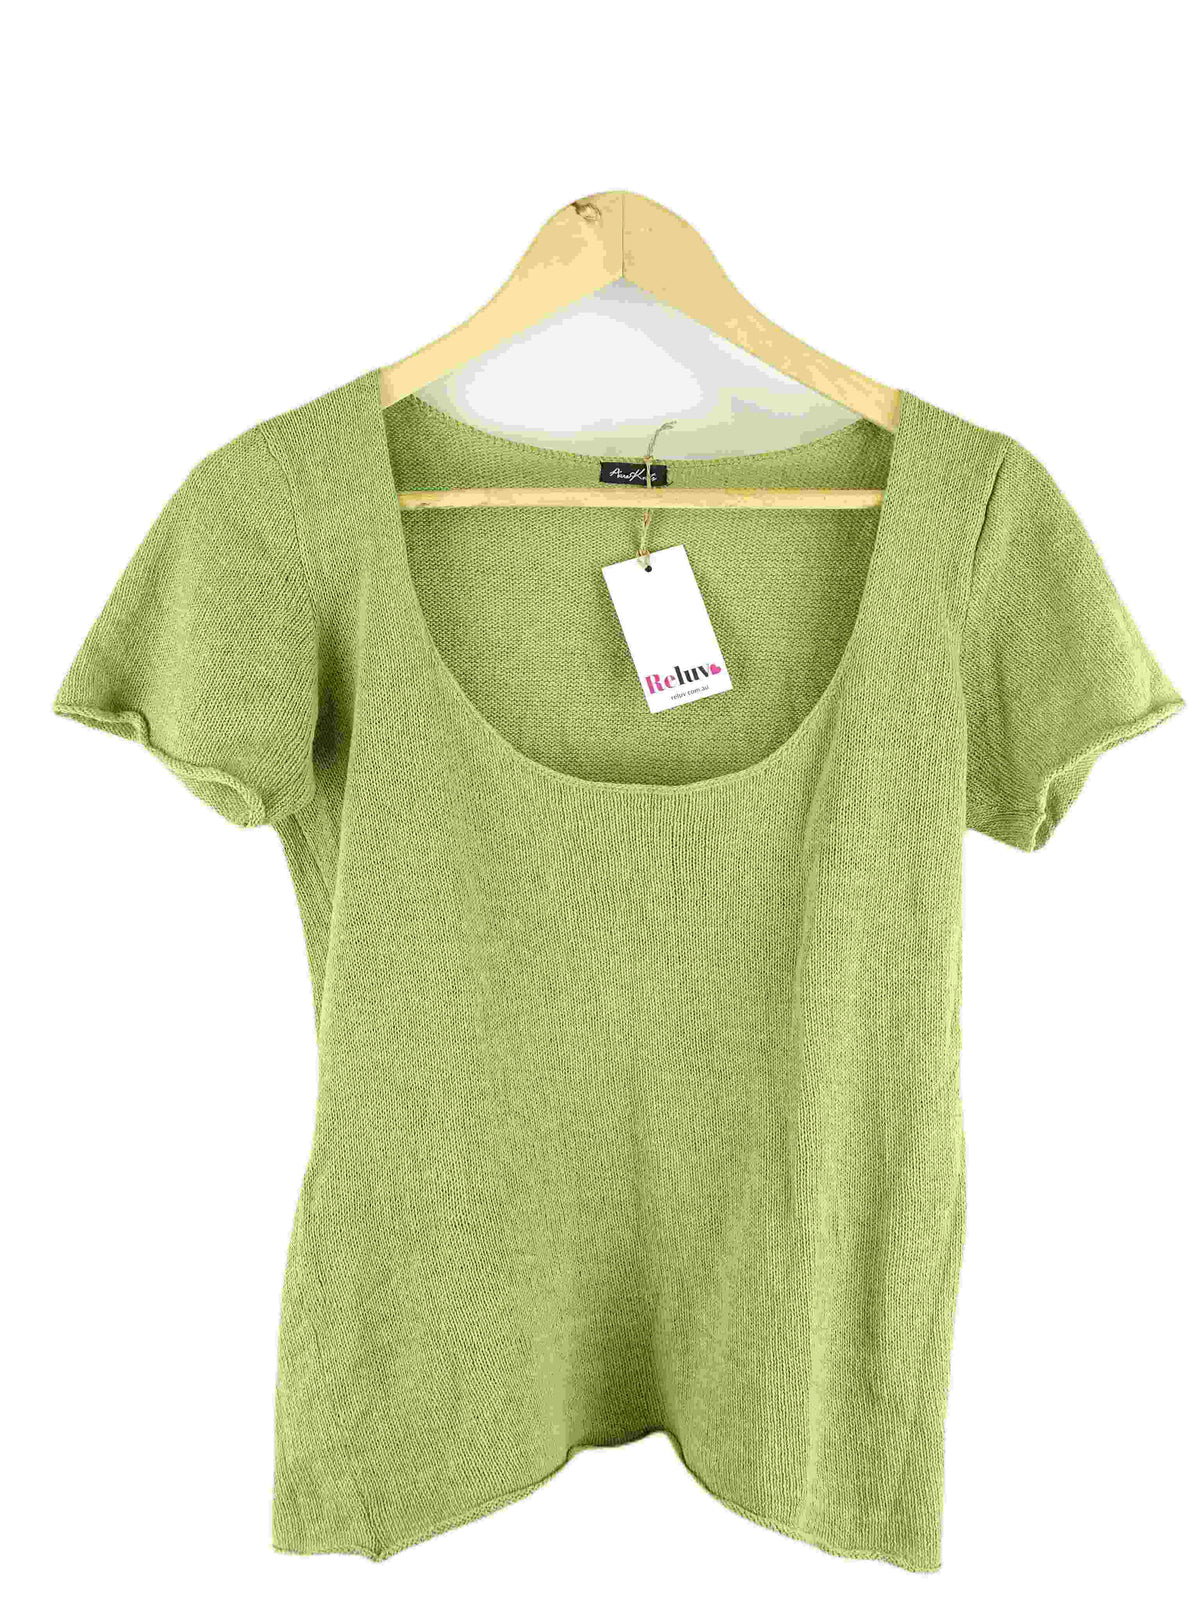 Aura Knits Green Tshirt L/XL